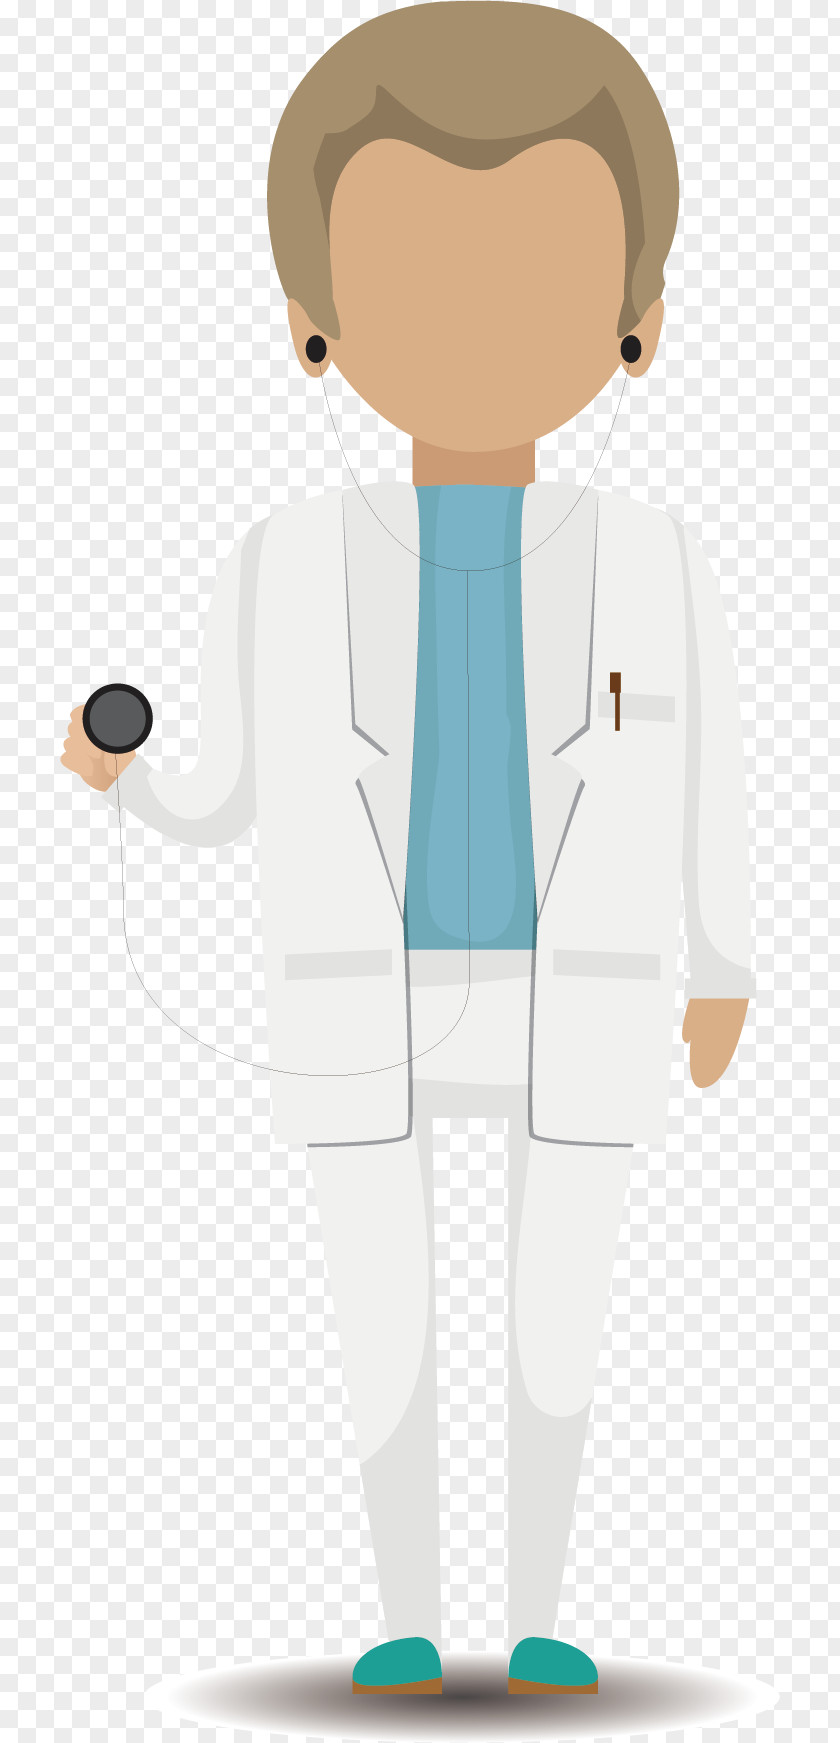 Cartoon Male Doctor Illustration PNG